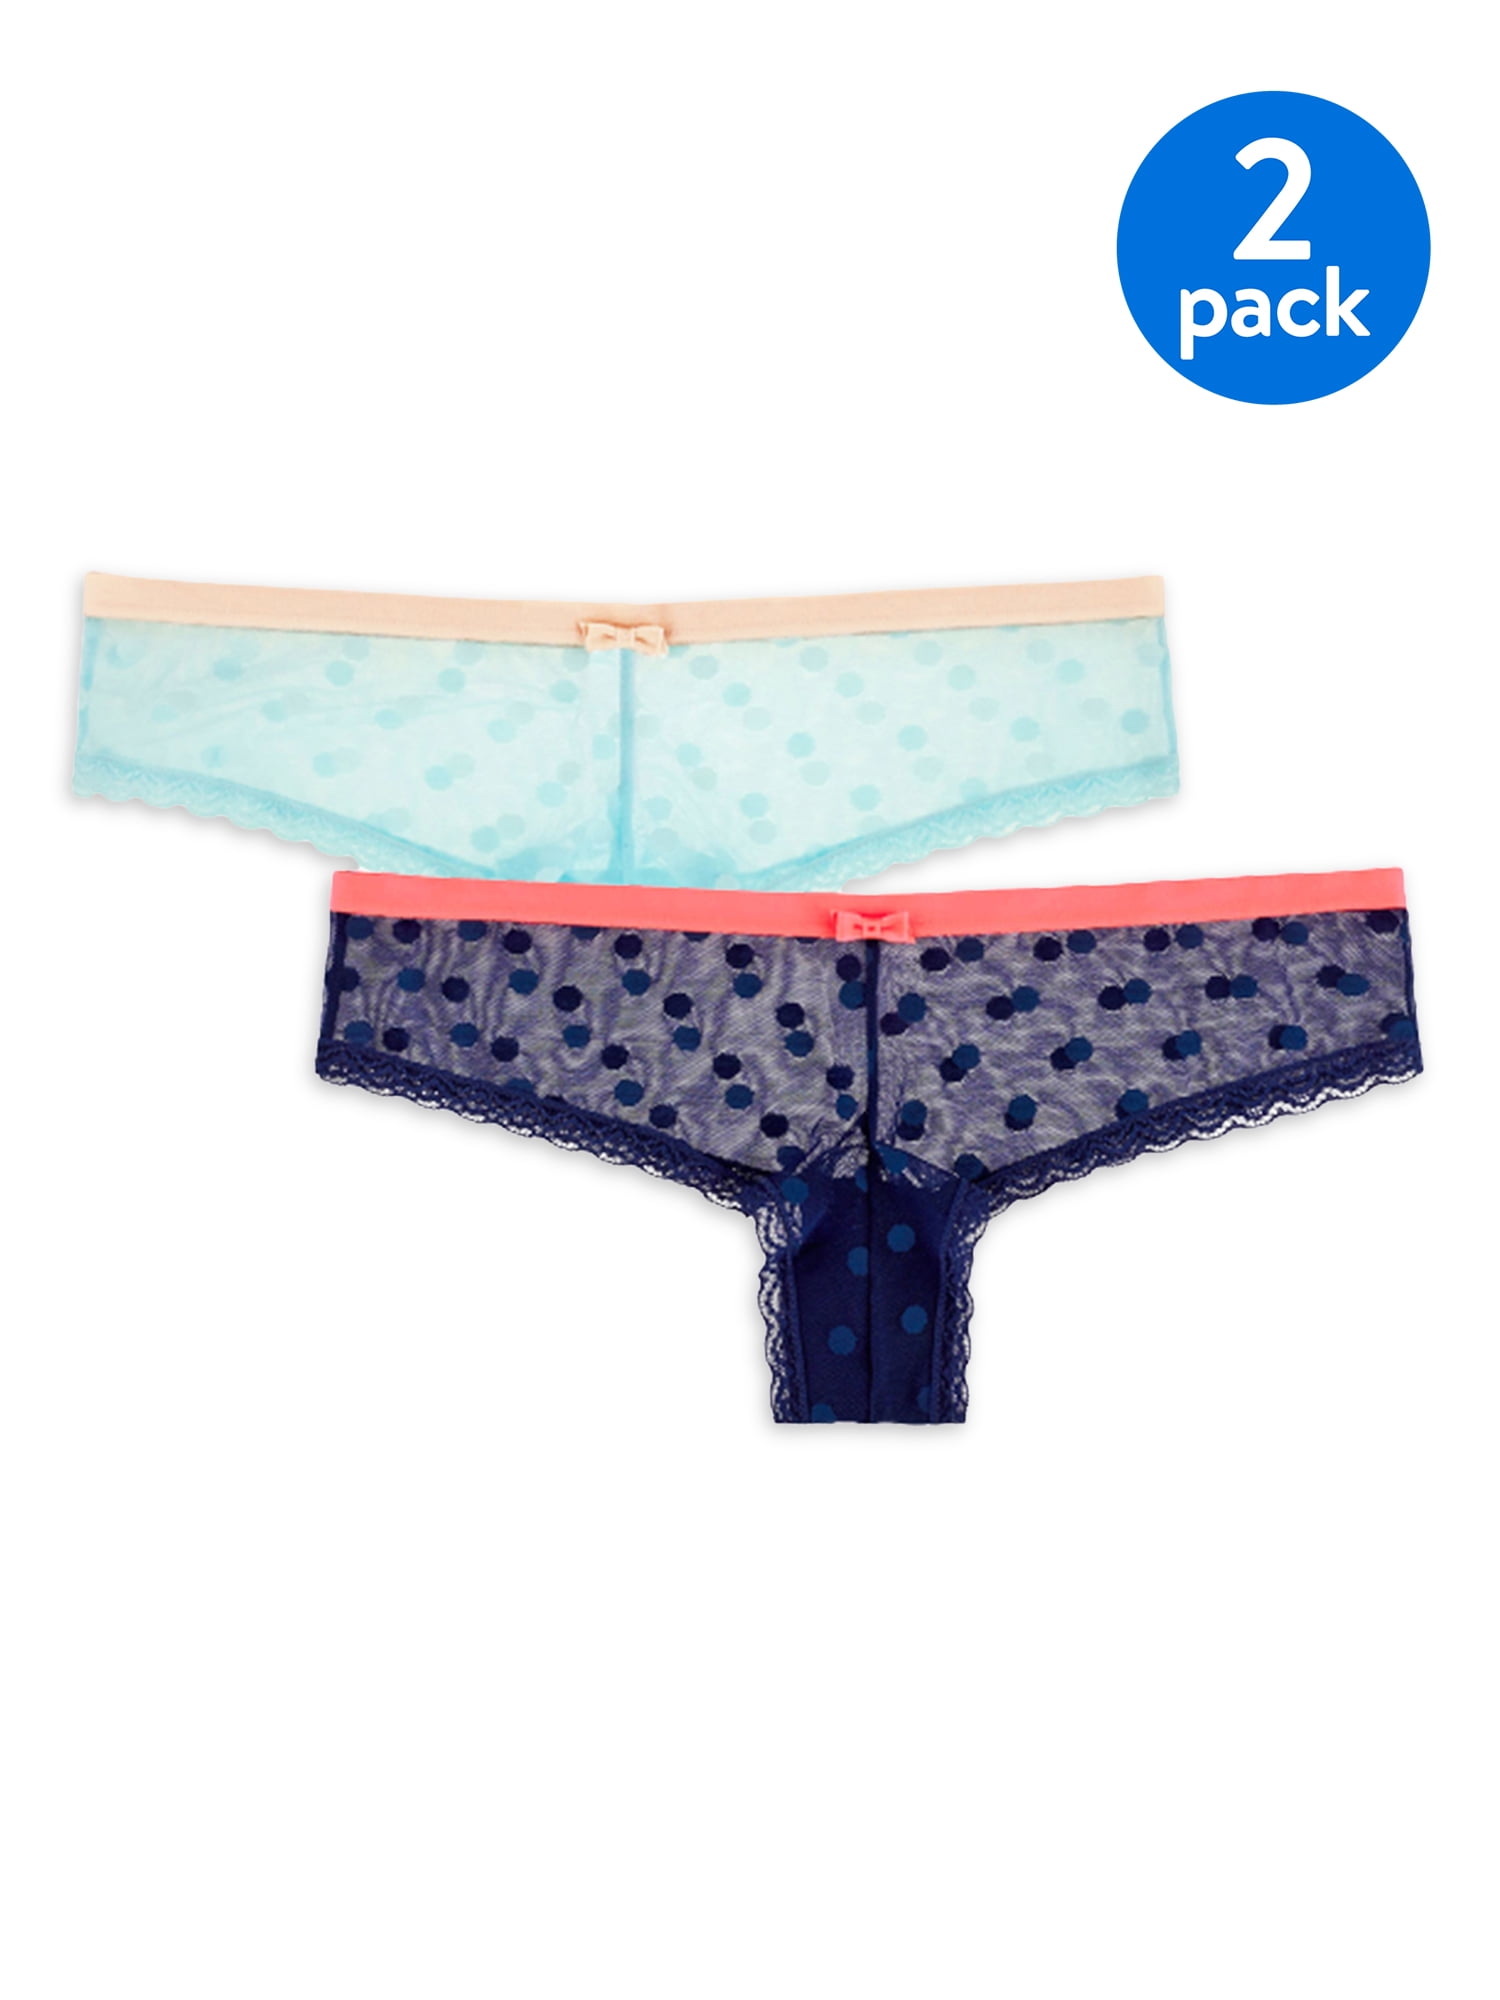 Undies.com Women's Dot Mesh Lace Cheeky Panties, 2 Pack 